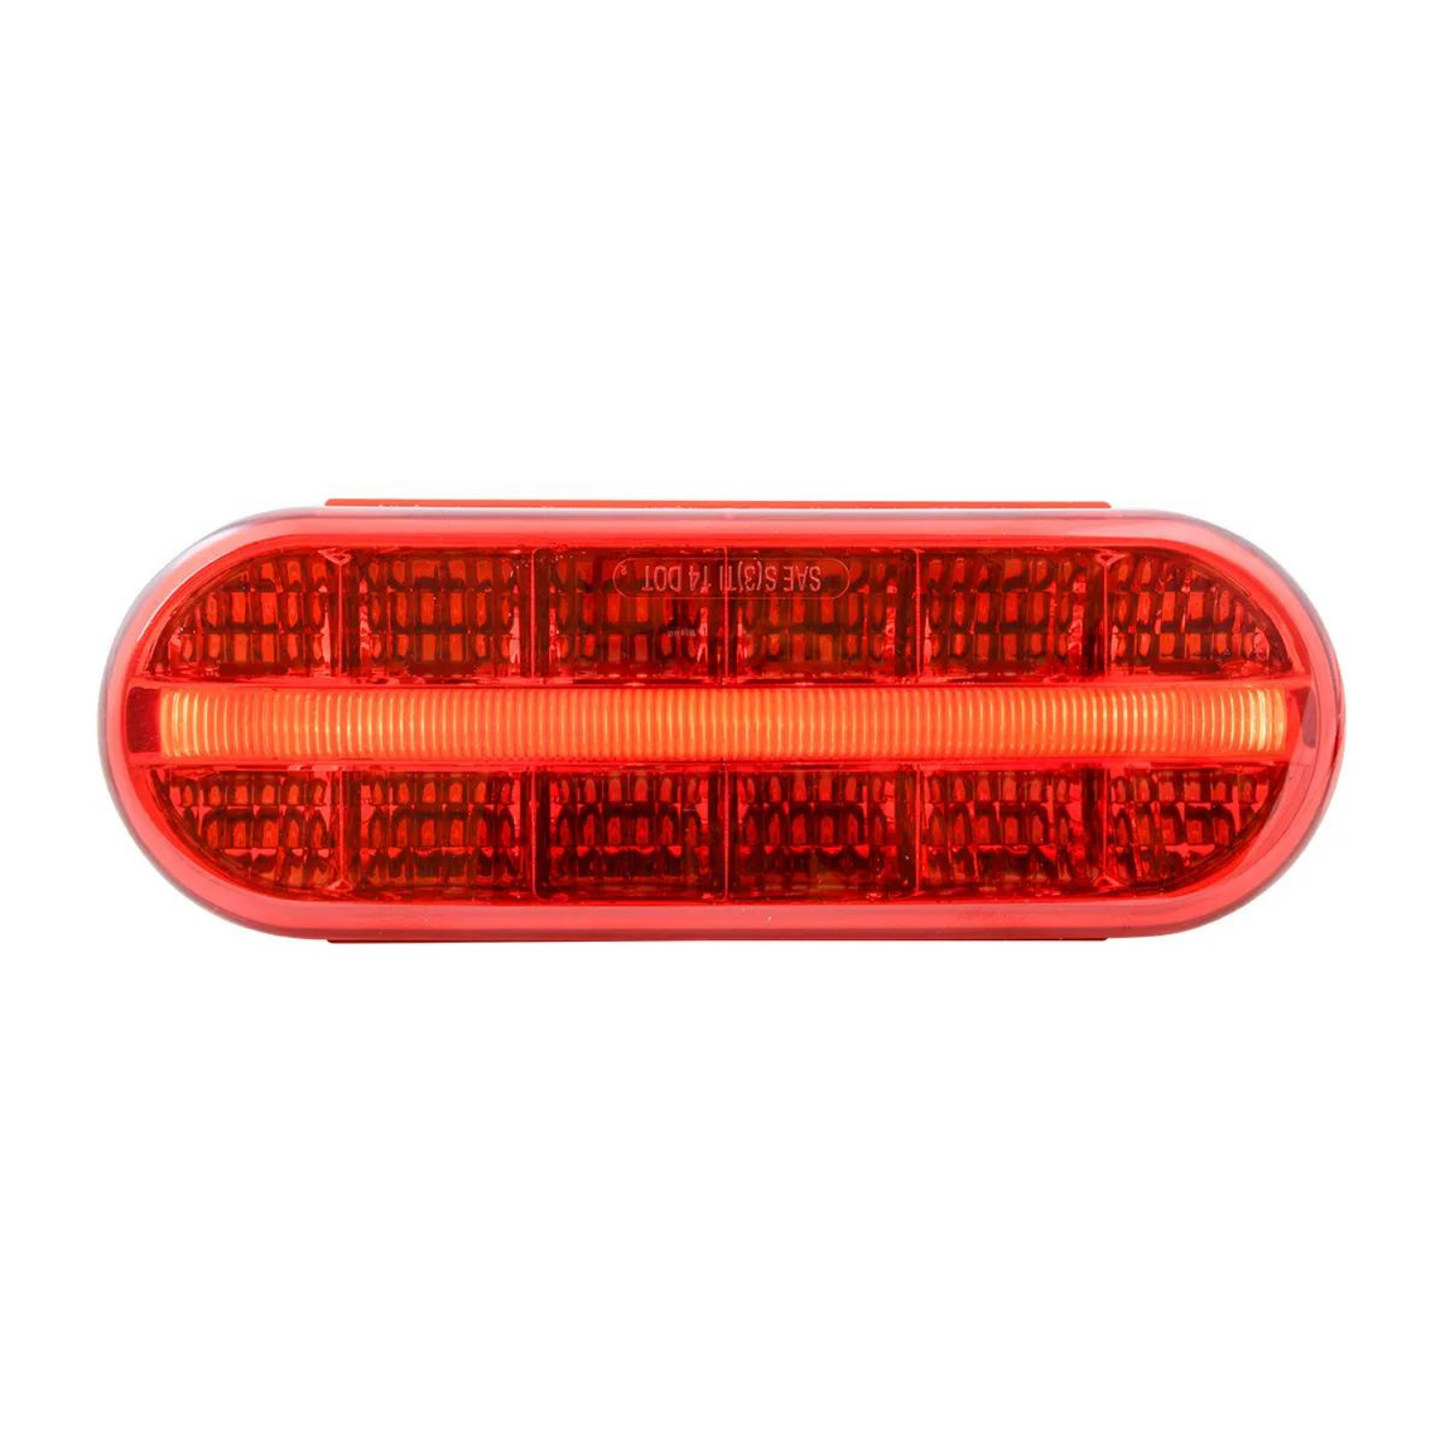 Oval Prime 14 LED Sealed Light in Red